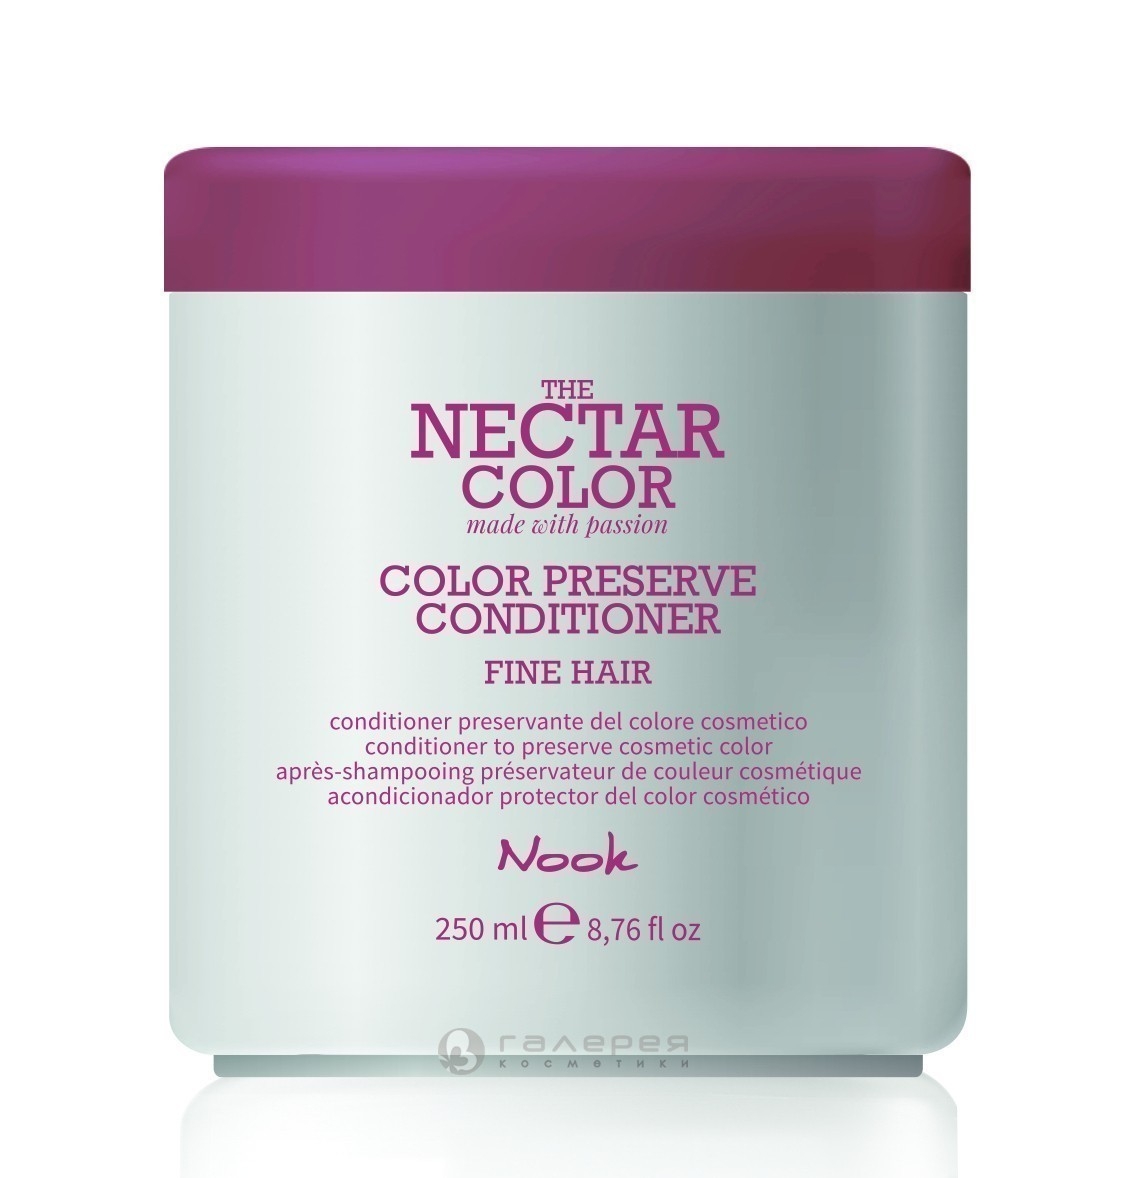 Balsam de par nook nectar color preserve fine hair 250 ml